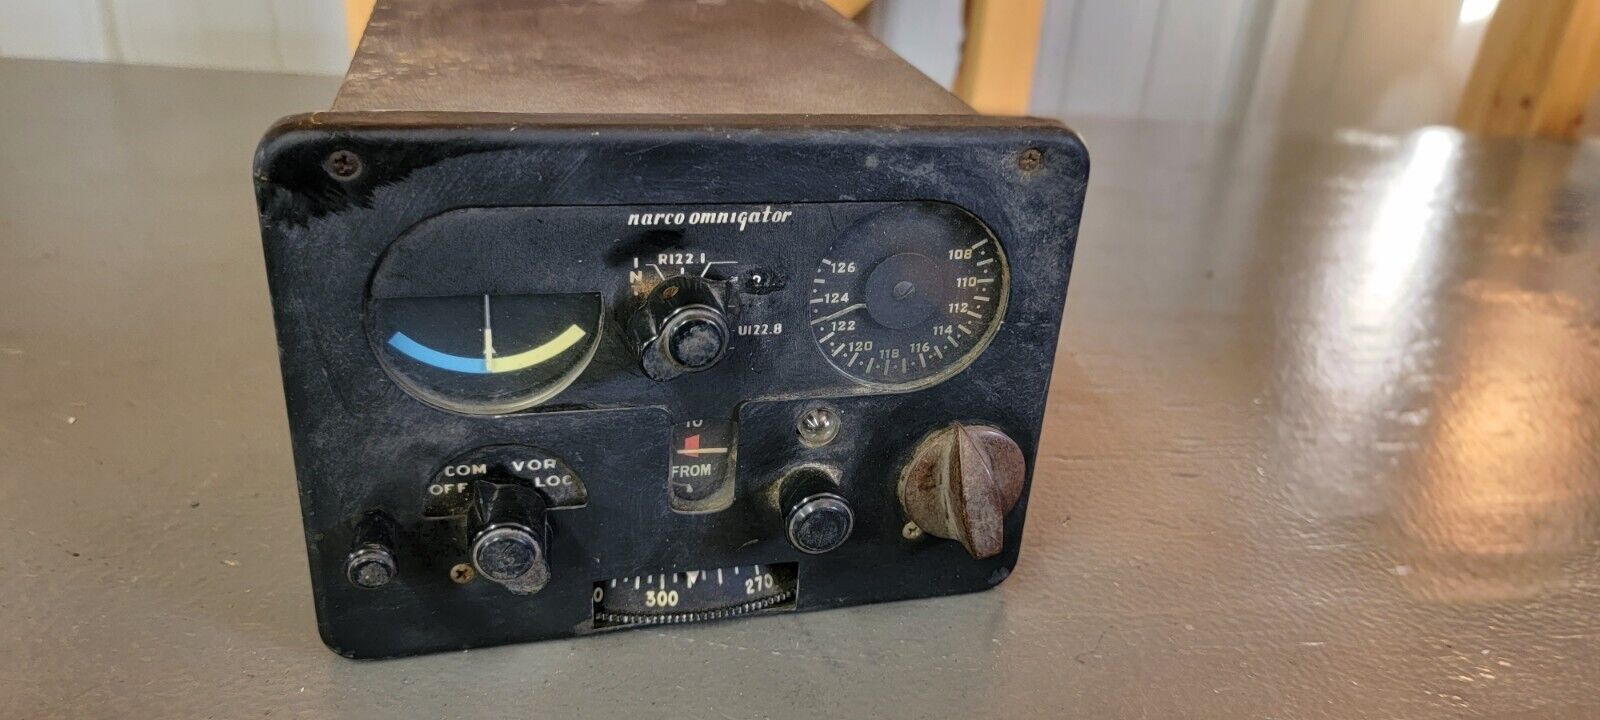 Vintage Narco omnigator aircraft navigation Transceiver Unit Radio